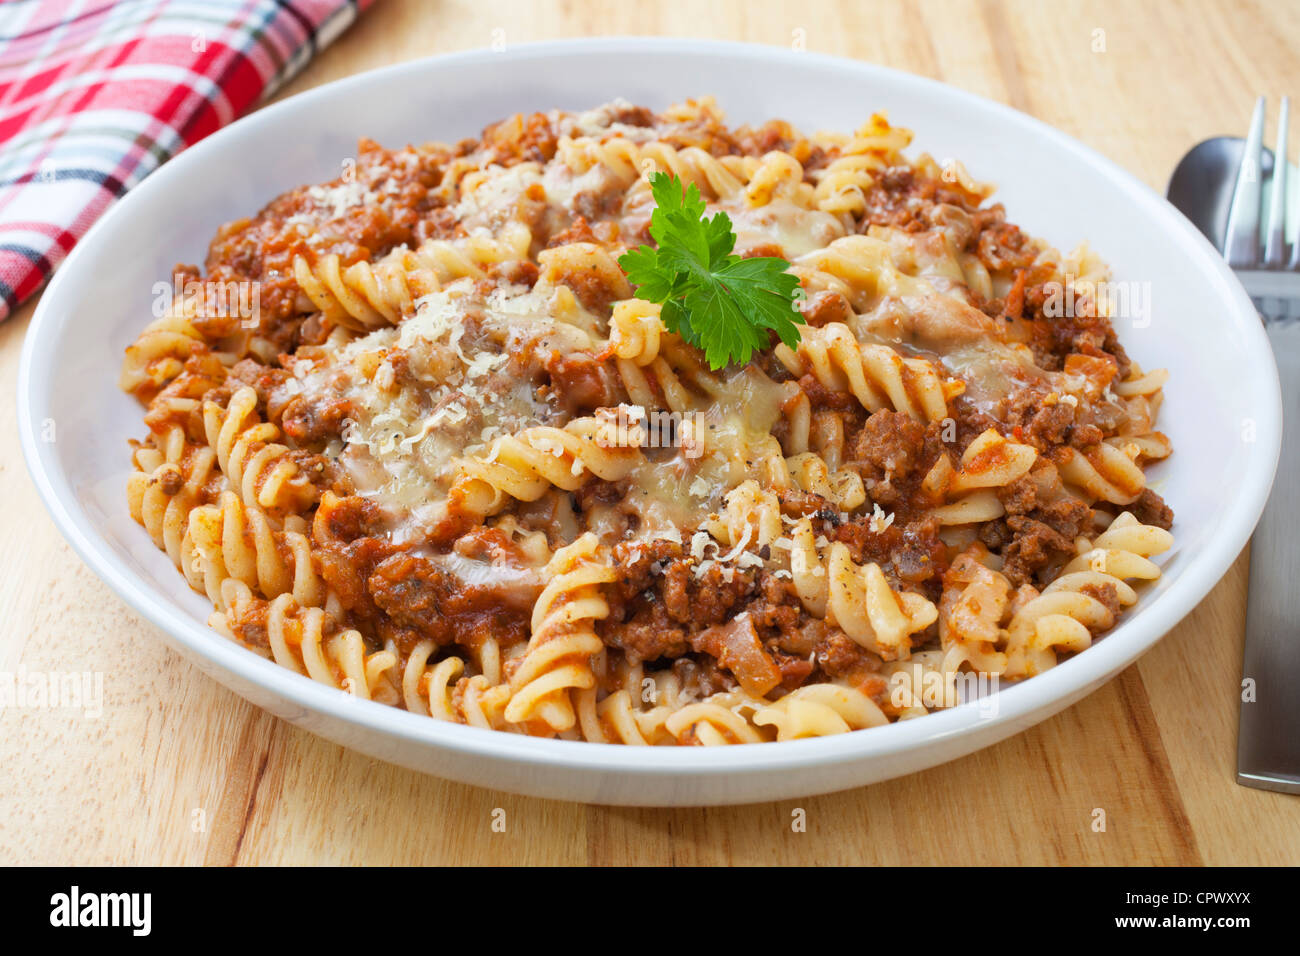 Fusili pasta baked with bolognese sauce, mozzarella and parmesan. Stock Photo